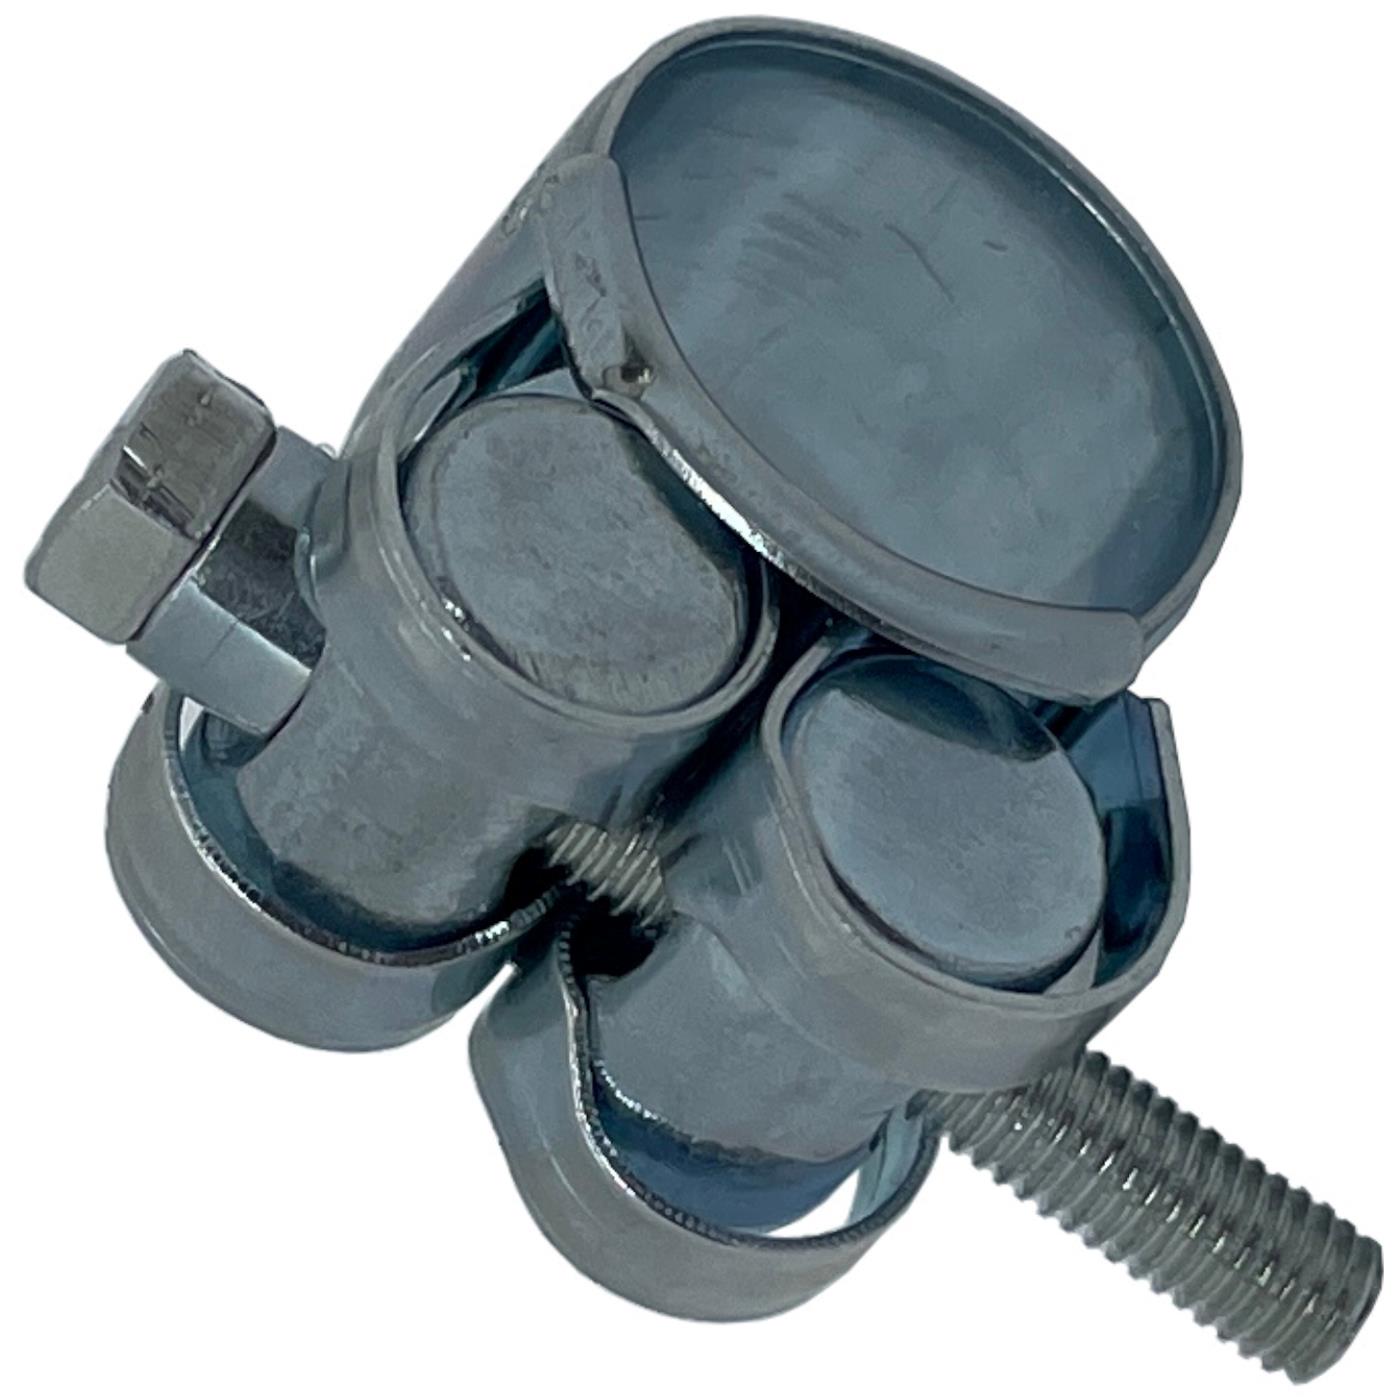 4x Lumonic Hinge pin clamp 23-25mm Galvanised Exhaust clamp for construction cars trucks